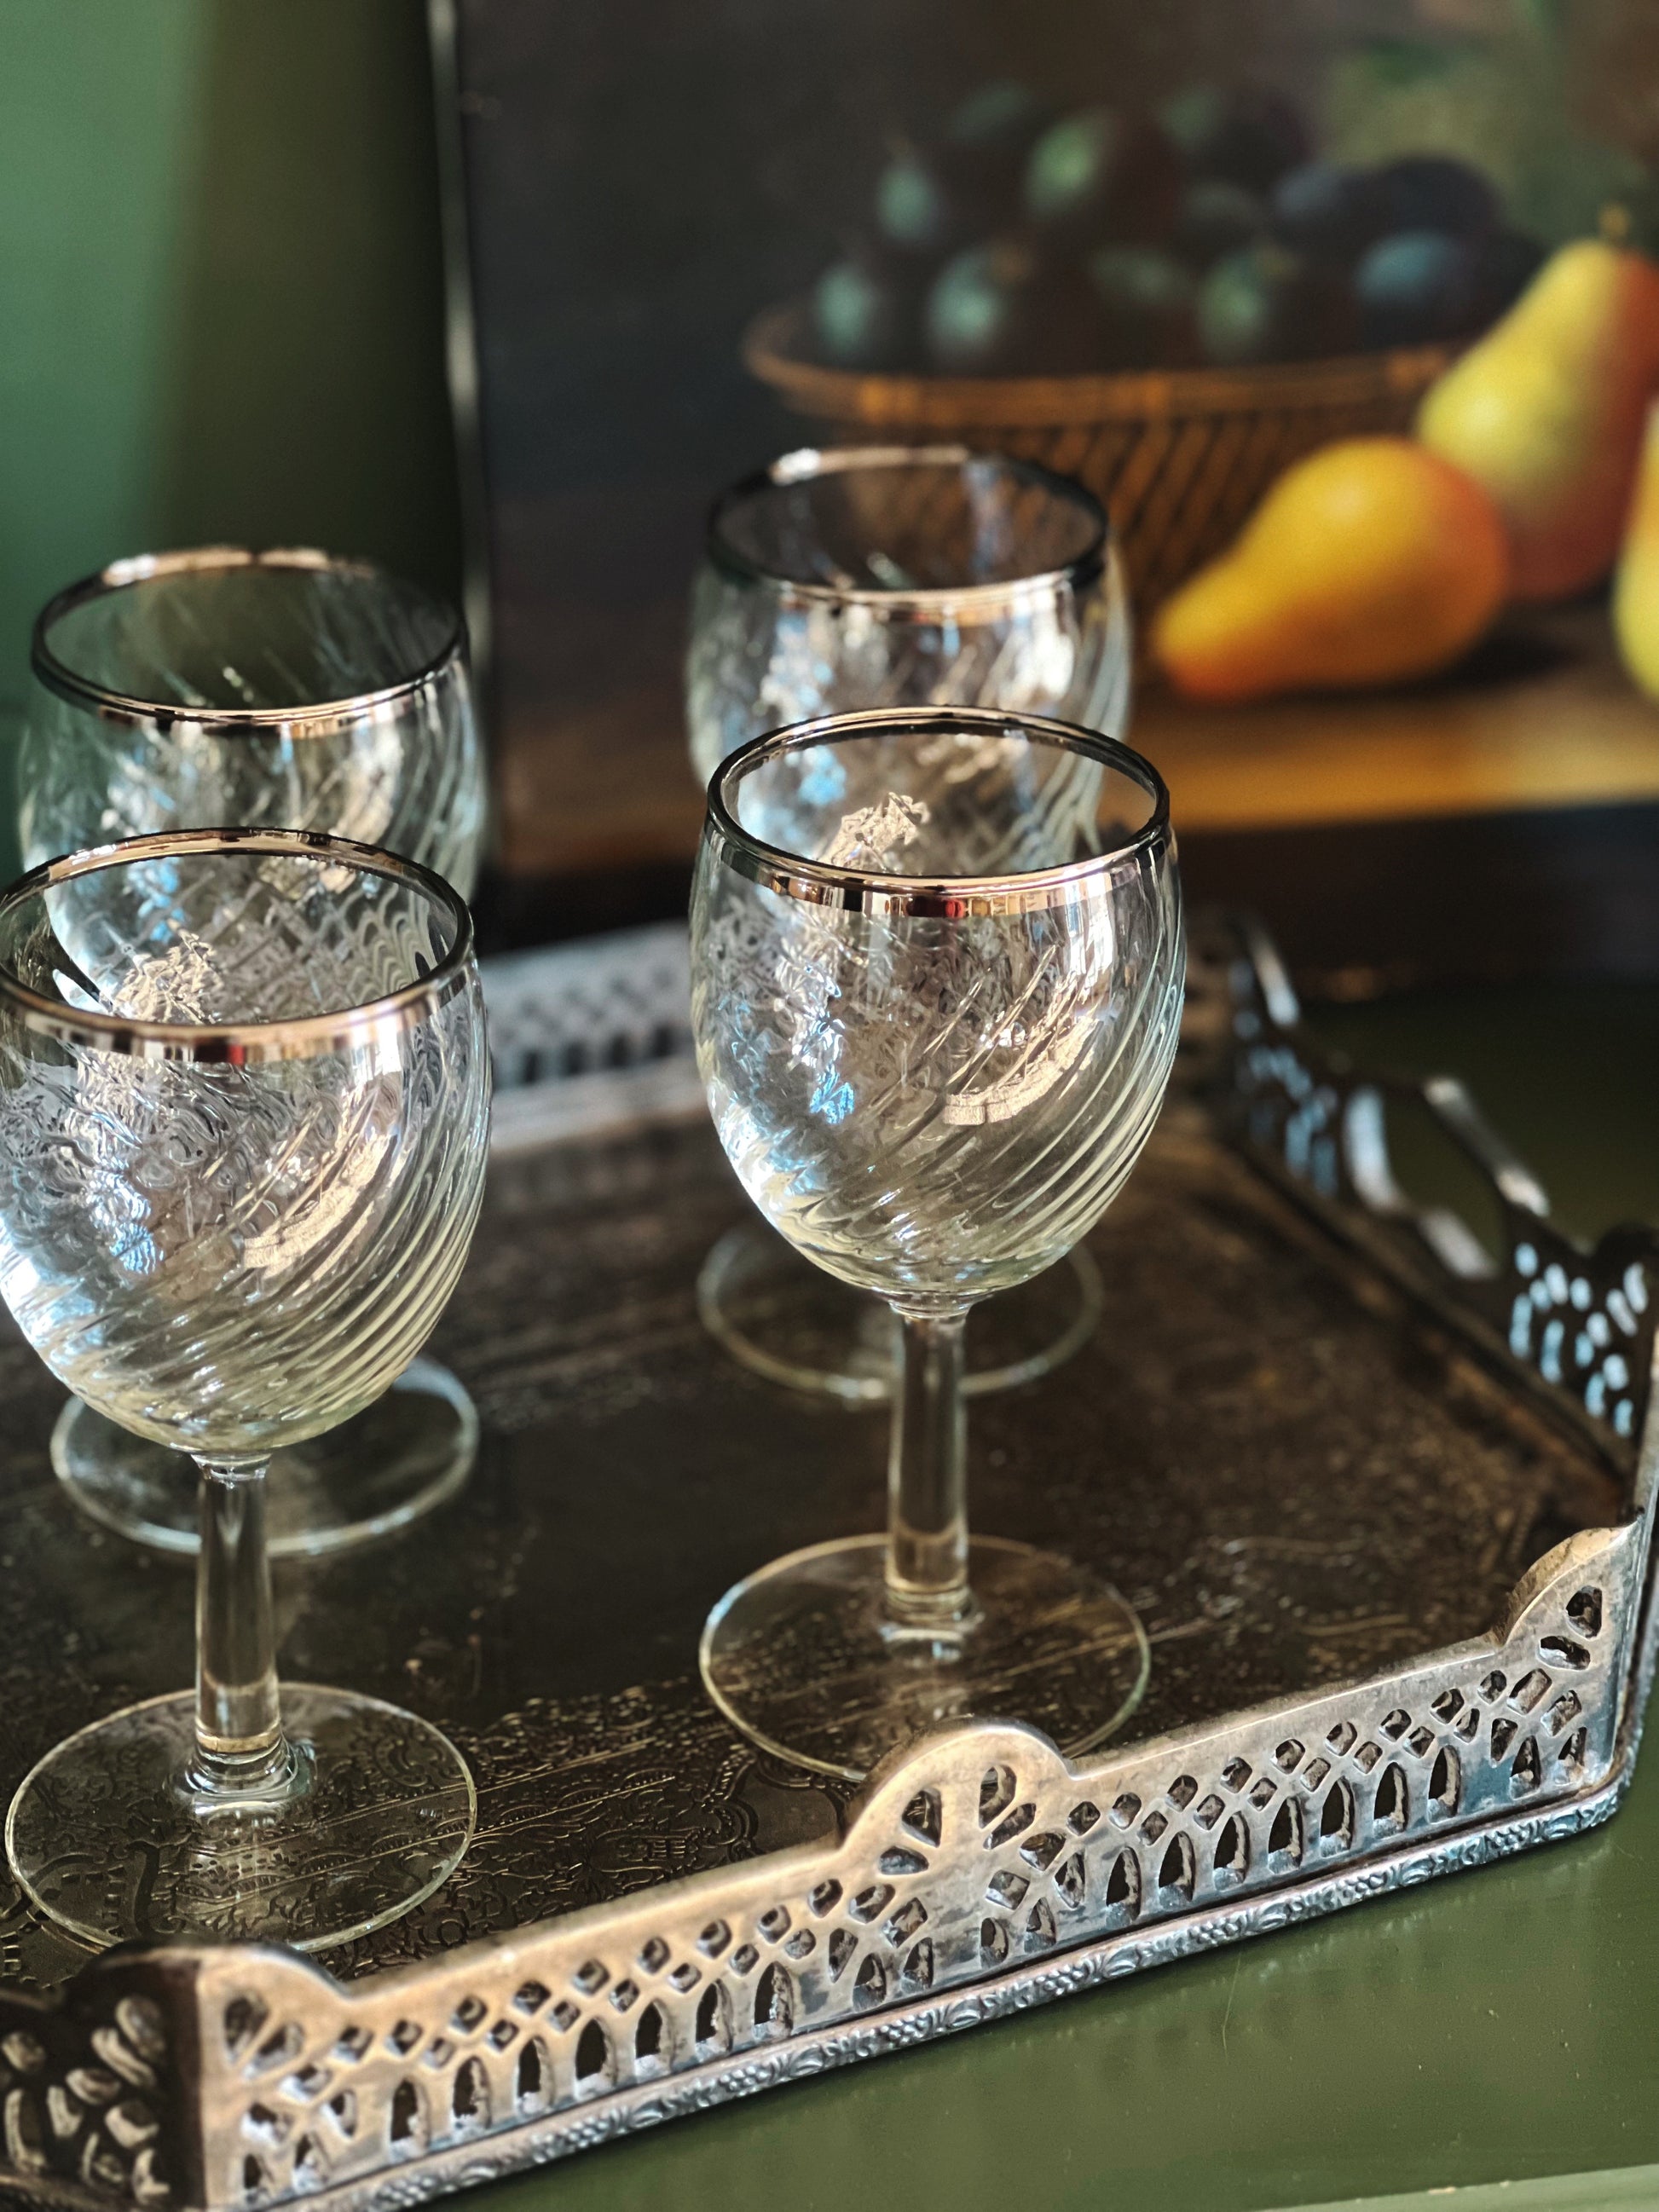 Laurel Crystal White Wine Glasses Set of 2